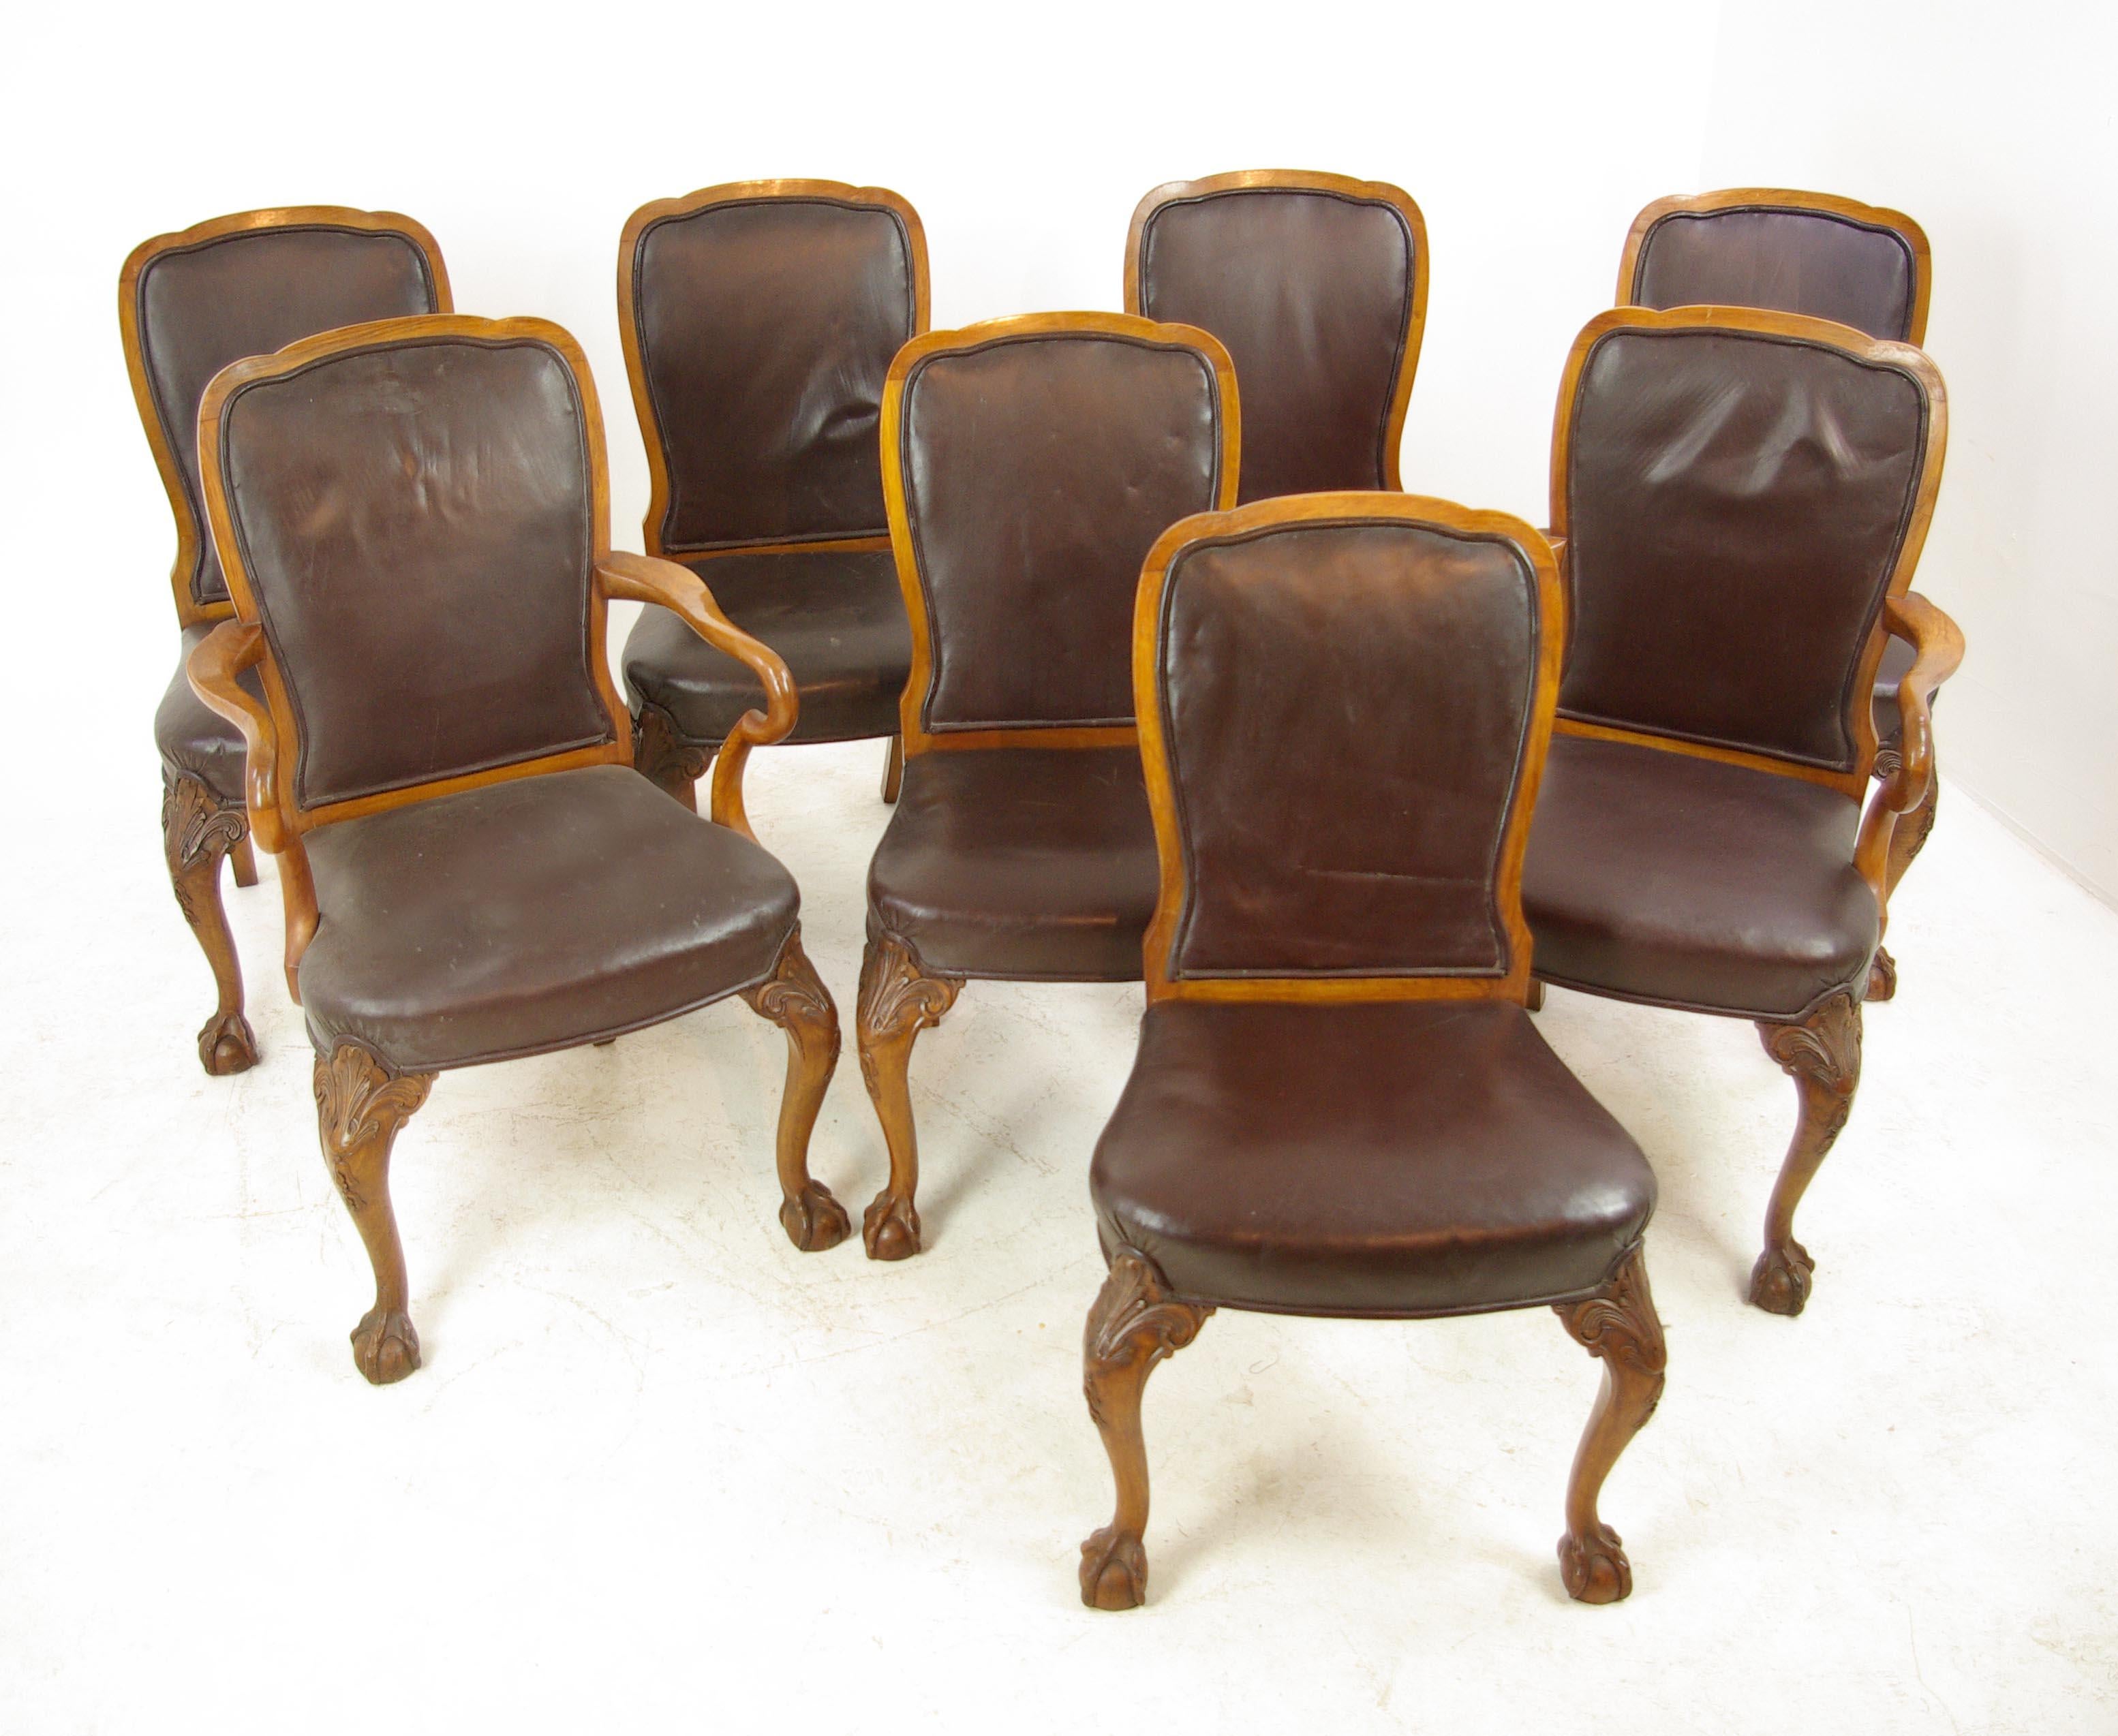 Antique Dining Chairs, Walnut, Leather Seats, Scotland 1930, B1348 5